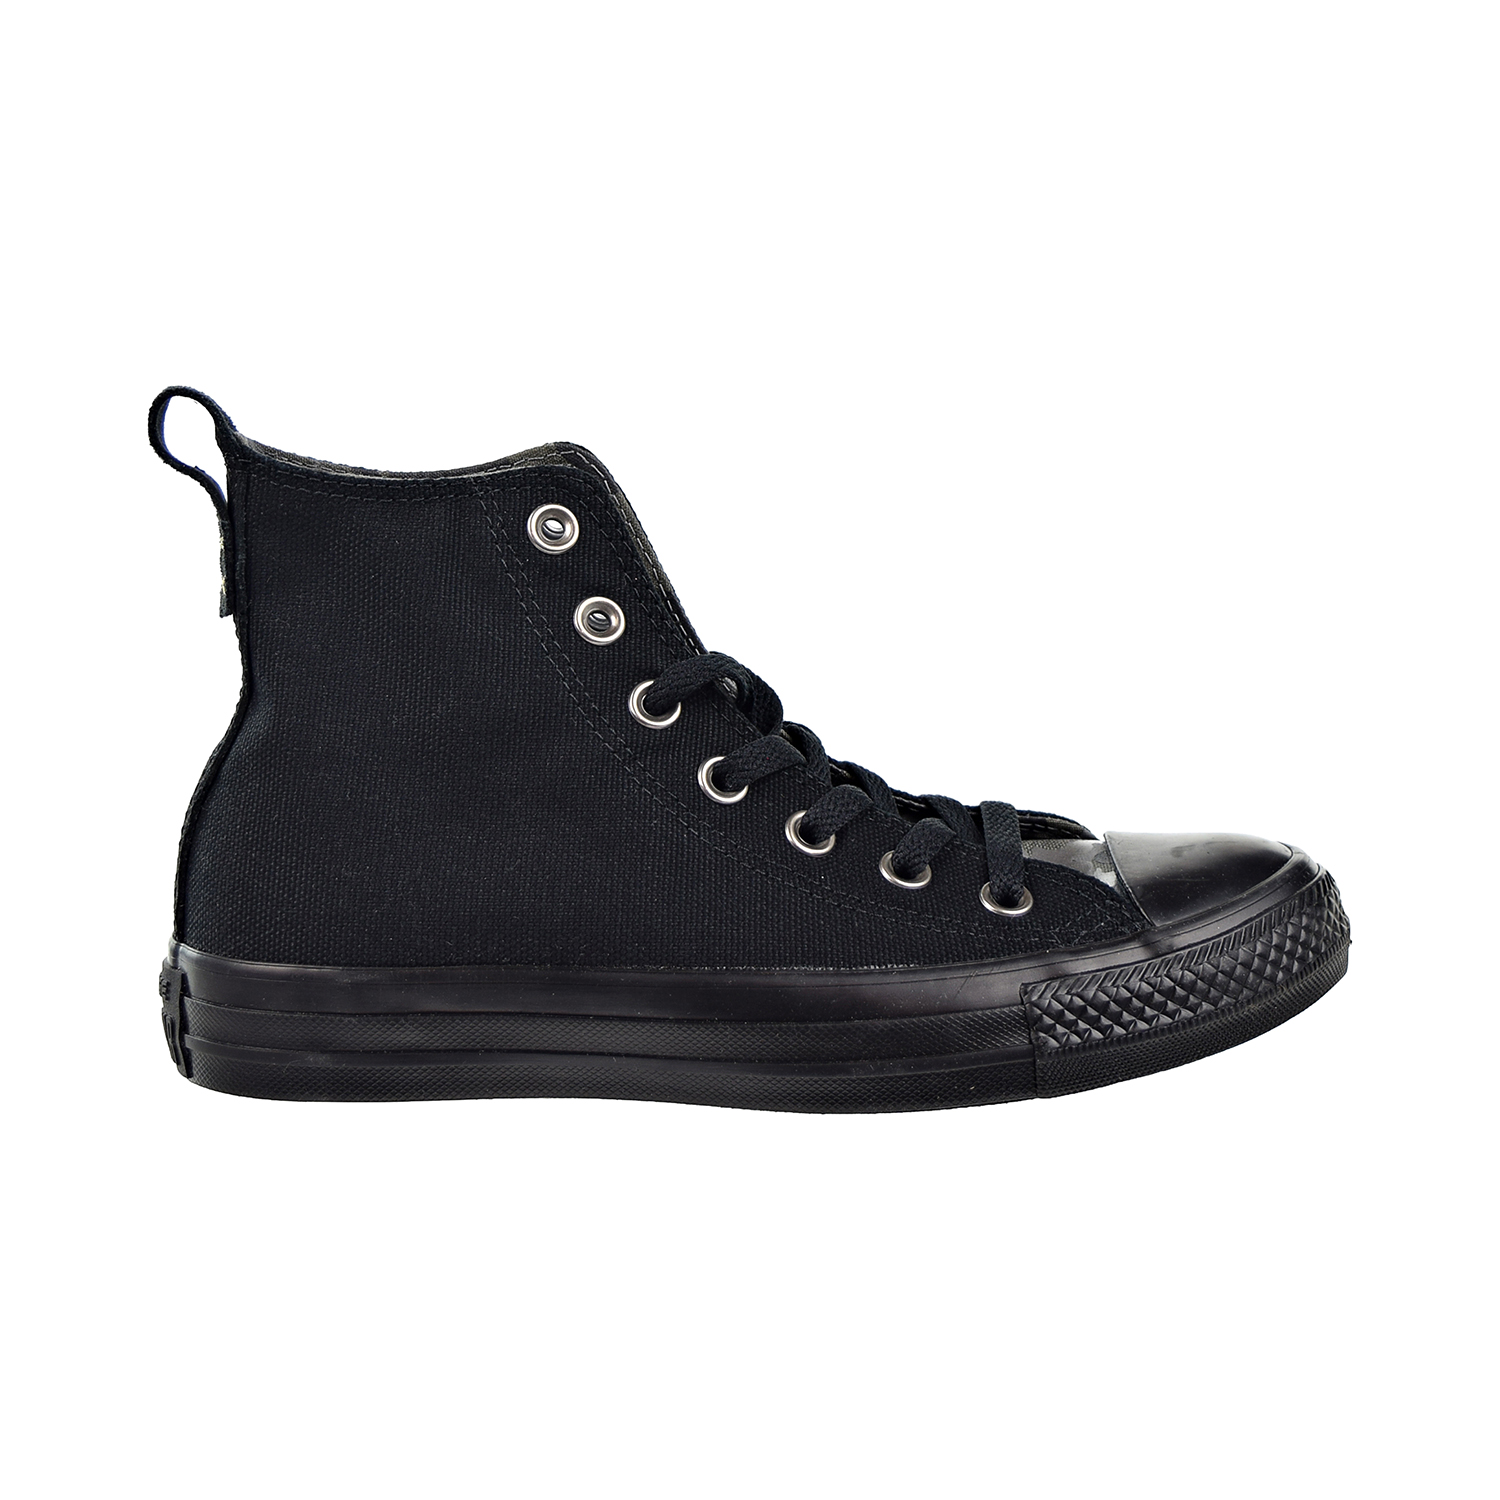 Converse Chuck Taylor All Star Hi Mens Shoes Black-Mason Black 159753c - image 1 of 6